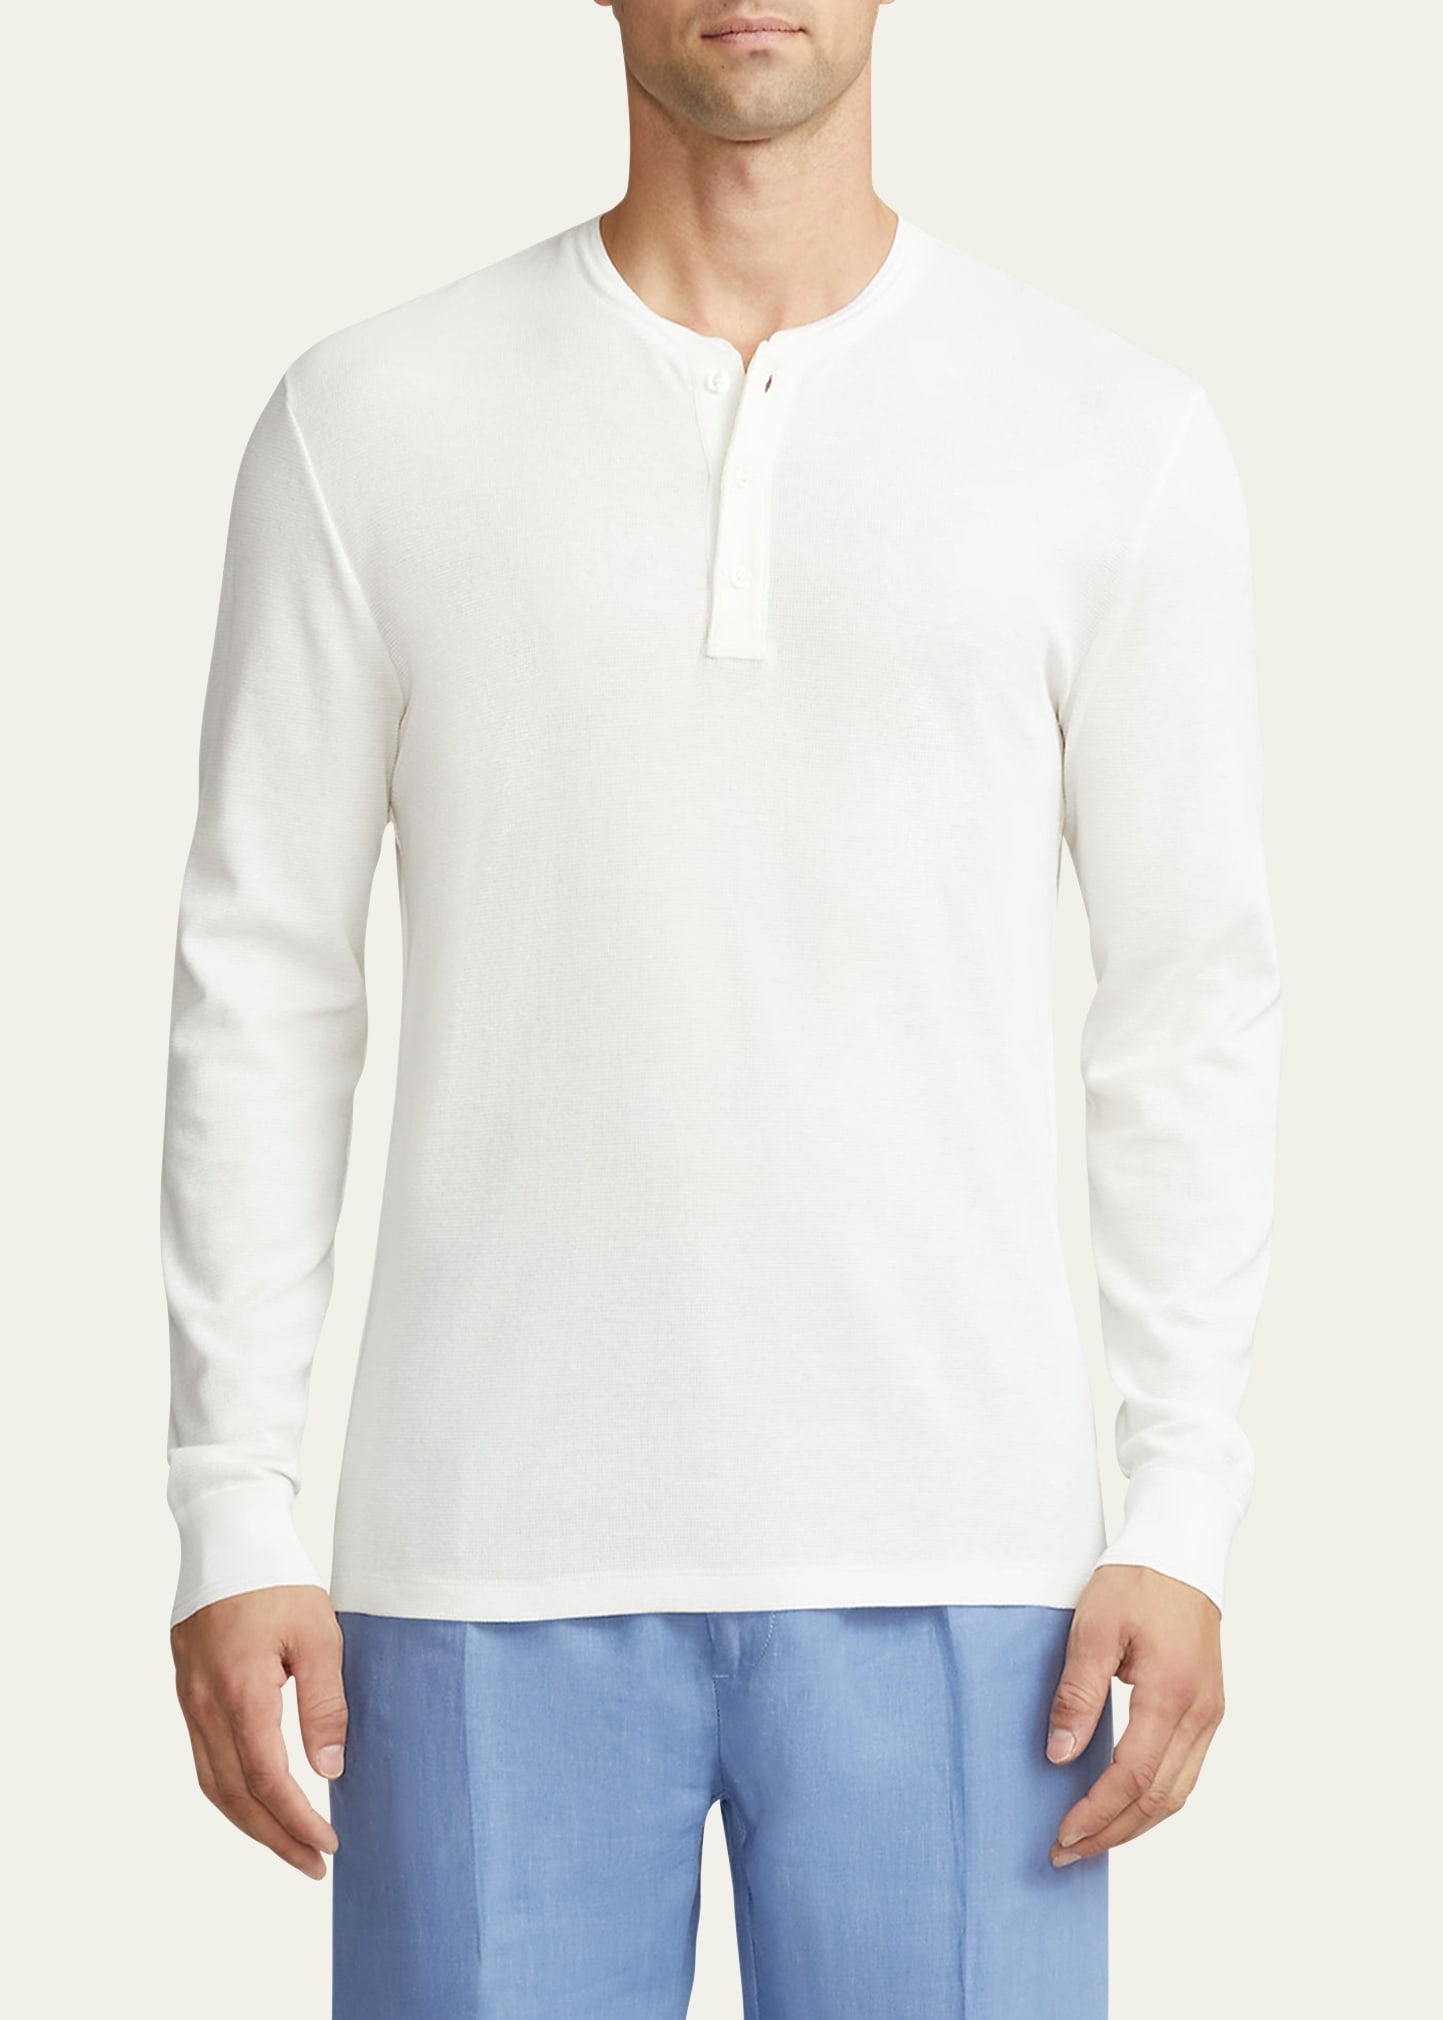 Men's Cotton and Mulberry Silk Henley Shirt - 4